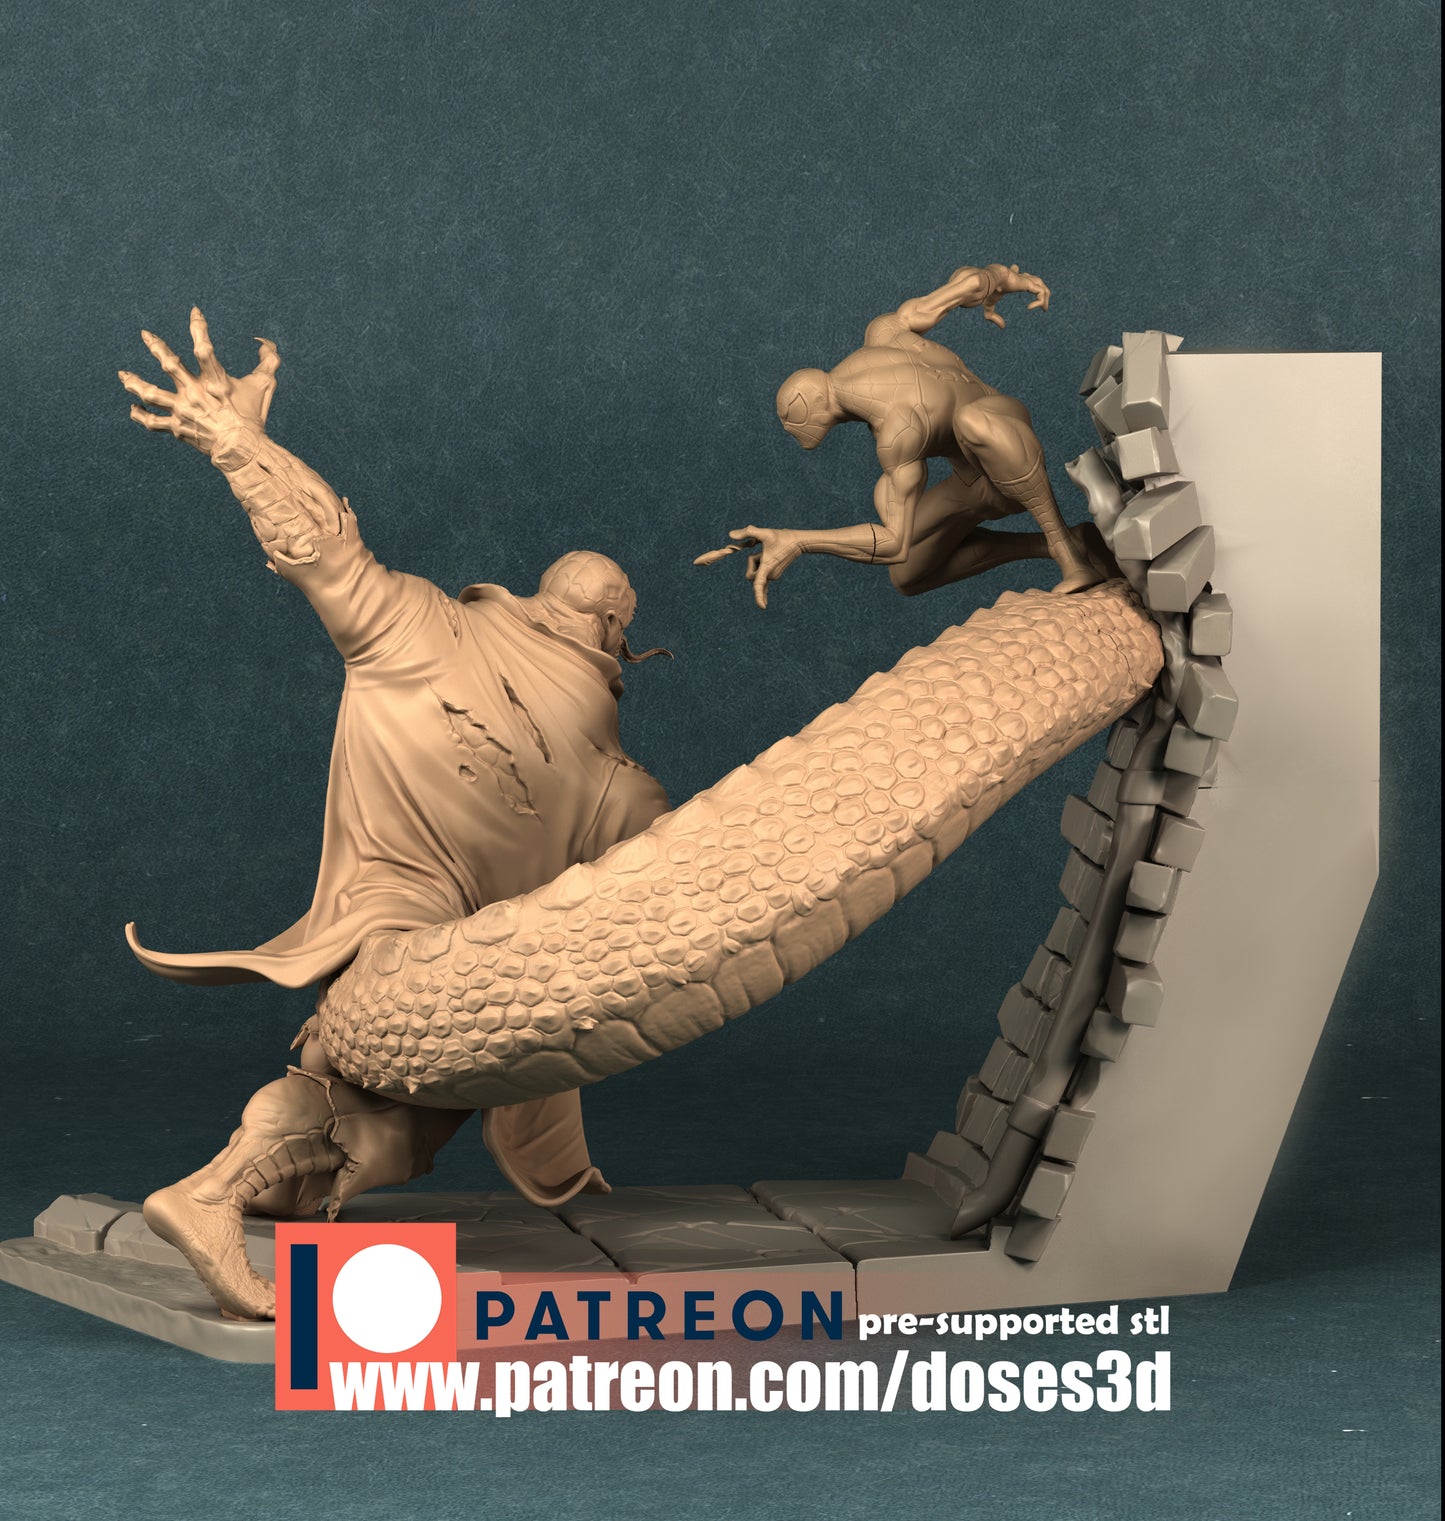 Doses3d Lizardman and Spiderman Diorama